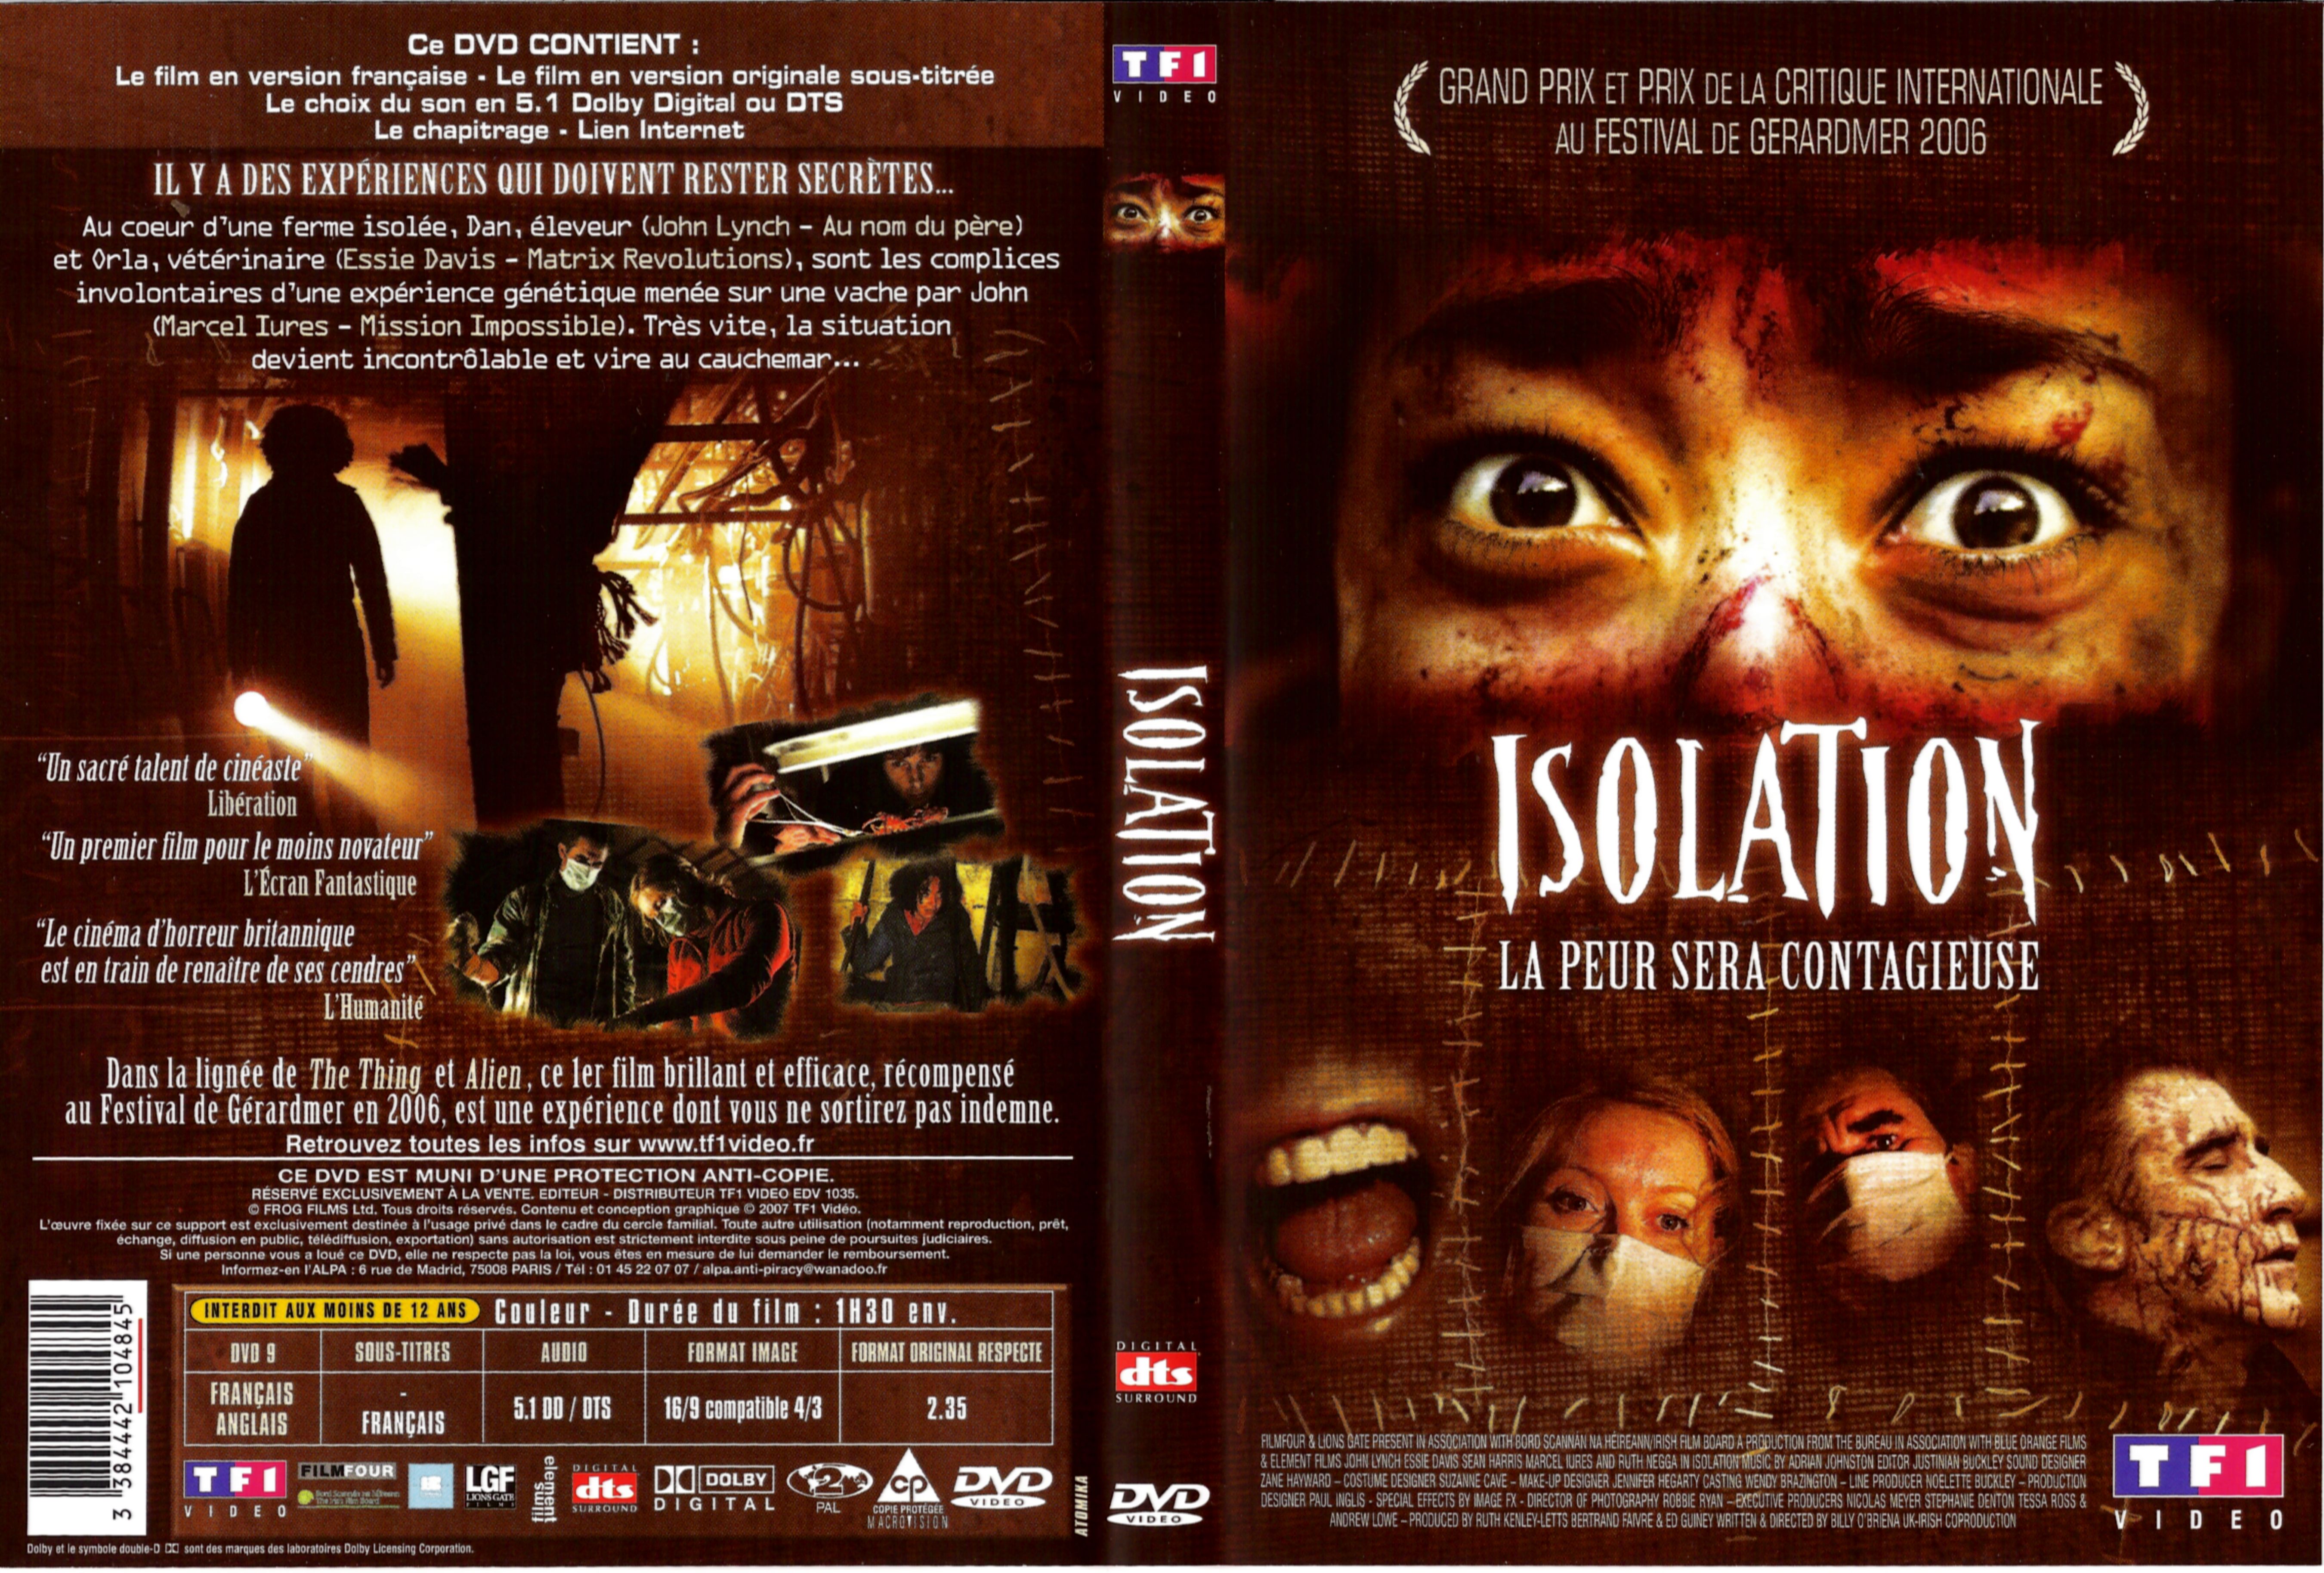 Jaquette DVD Isolation v2